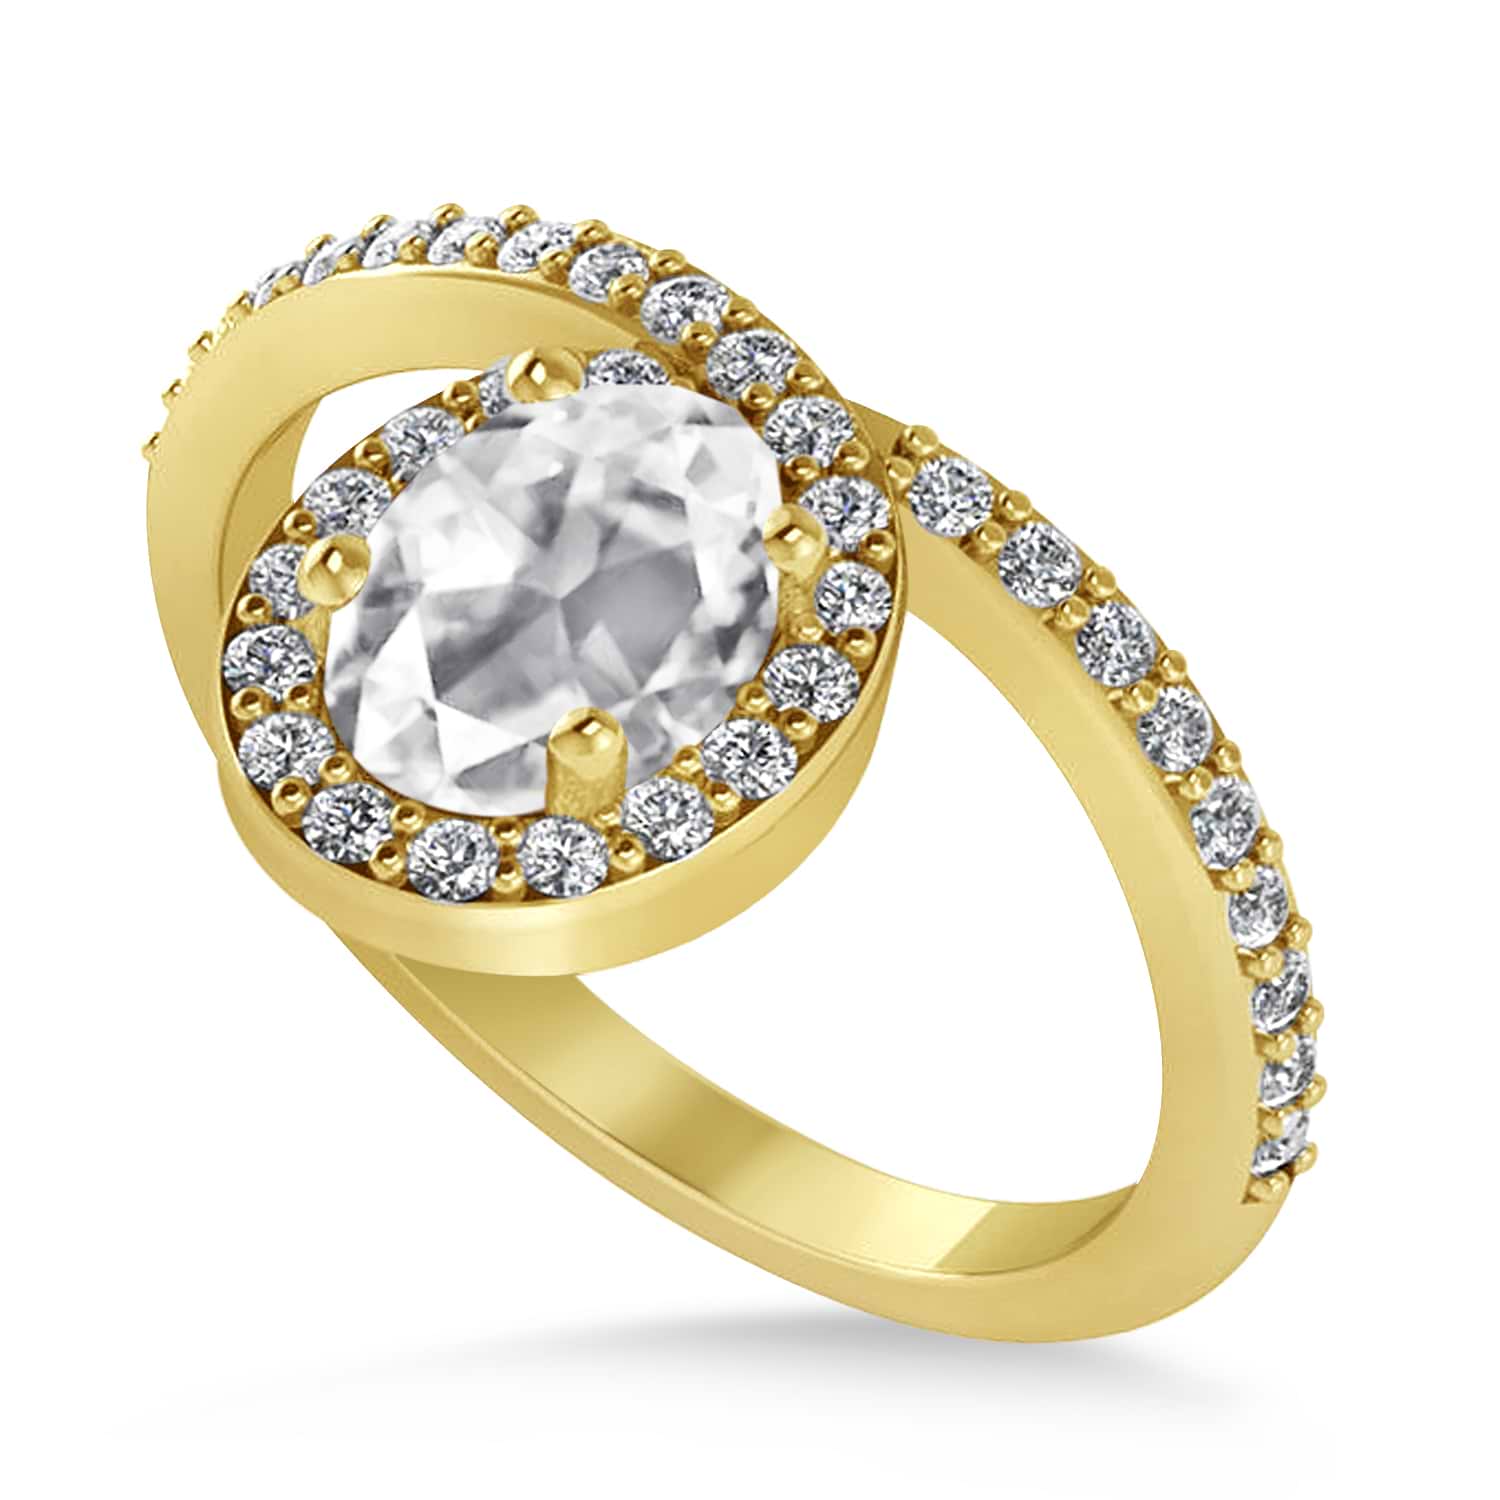 Oval White Diamond Nouveau Ring 18k Yellow Gold (1.11 ctw)